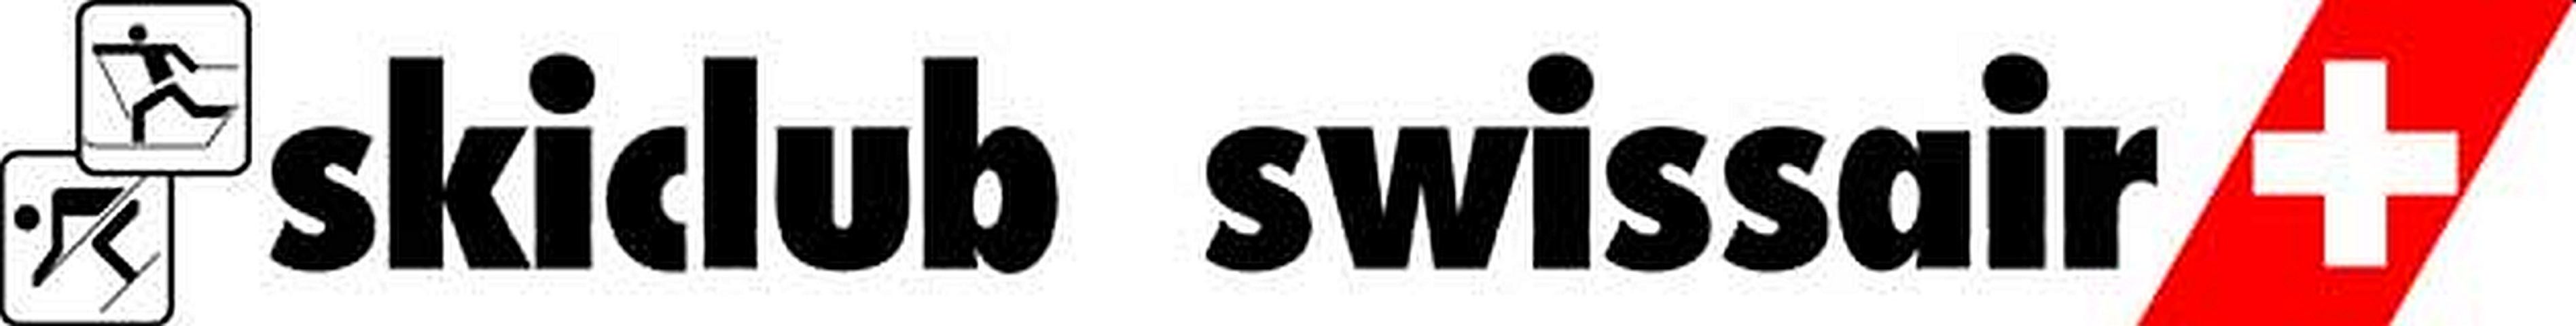 Skiclub Swissair